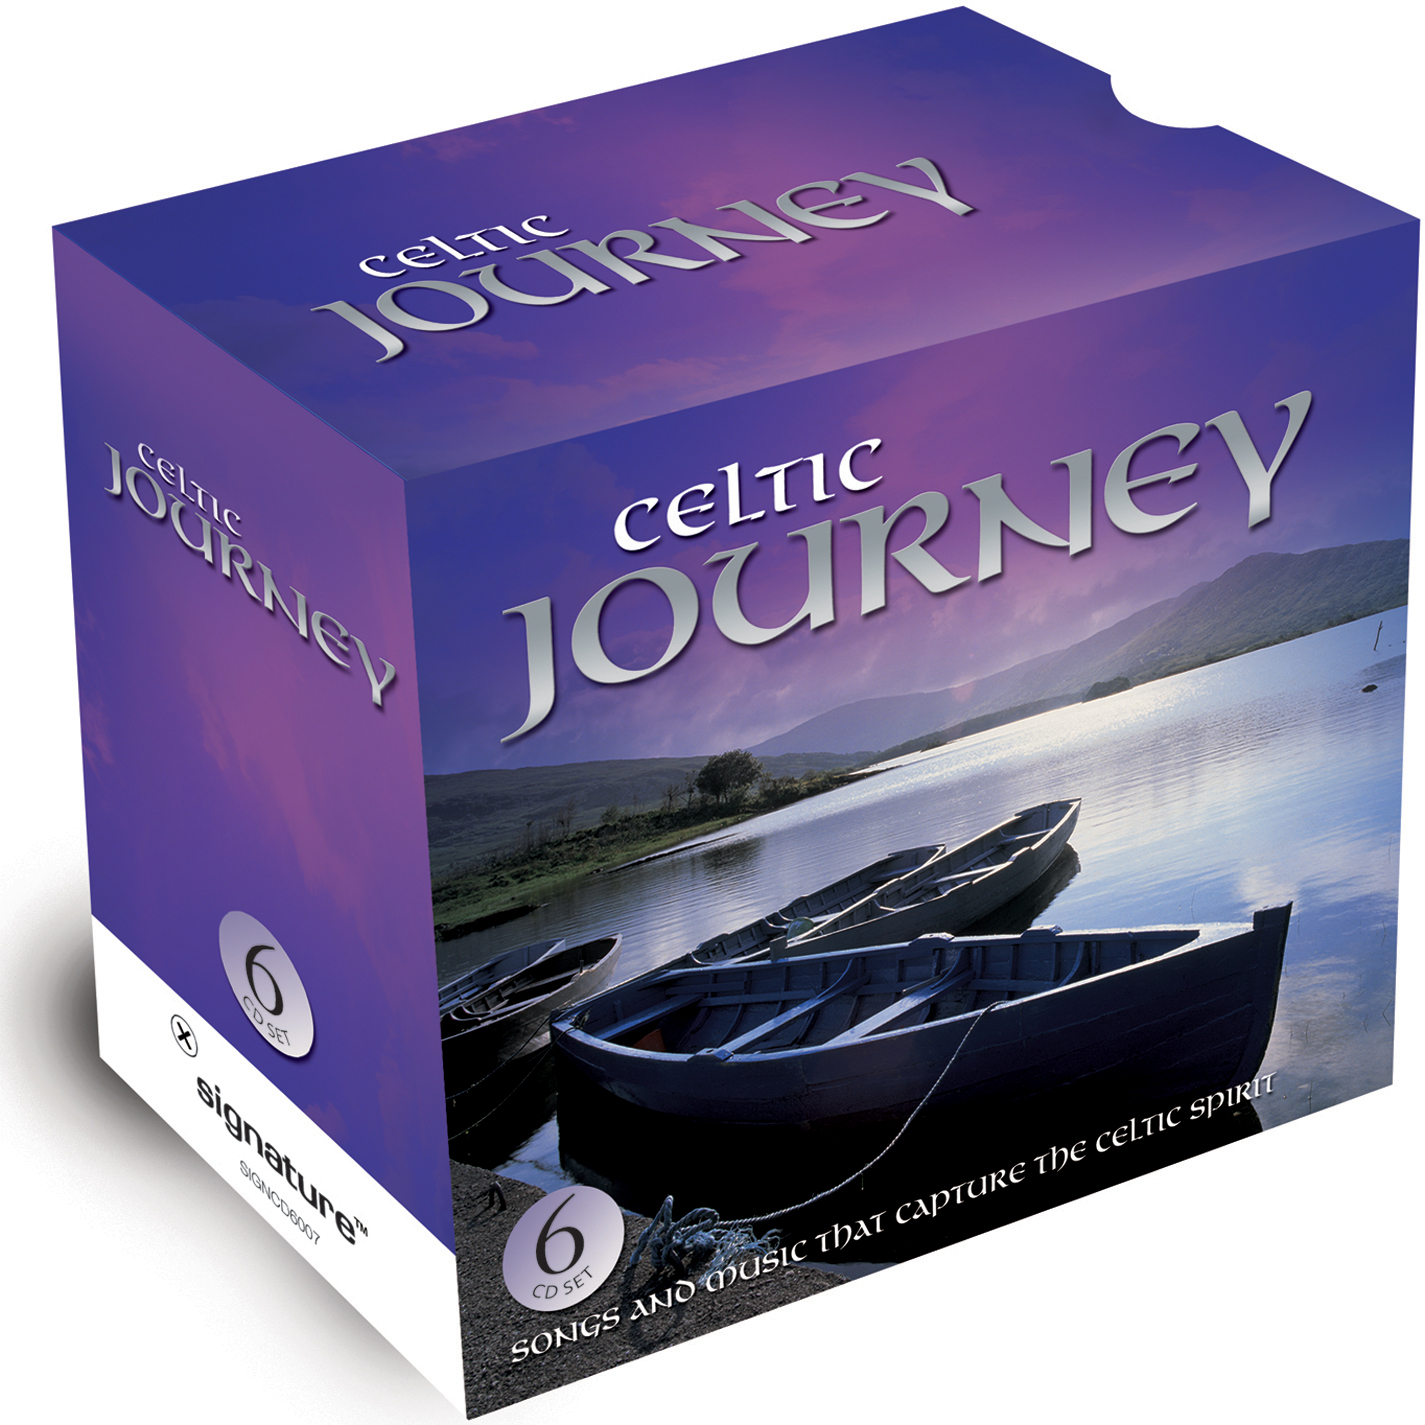 celtic journey cover